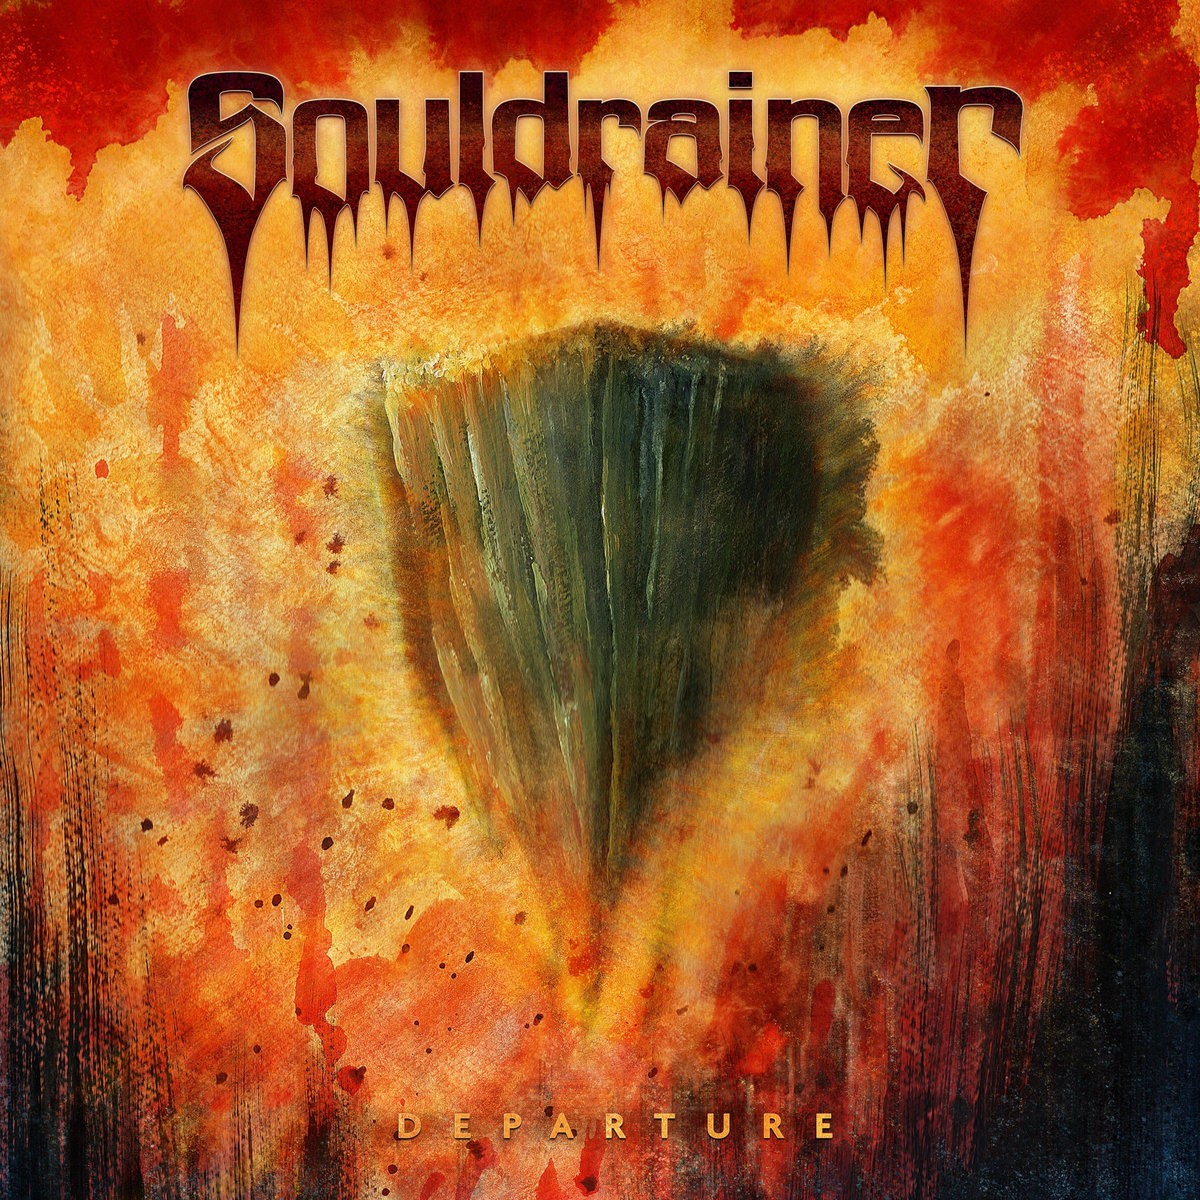 Souldrainer - Departure (2022) Limited Red Vinyl